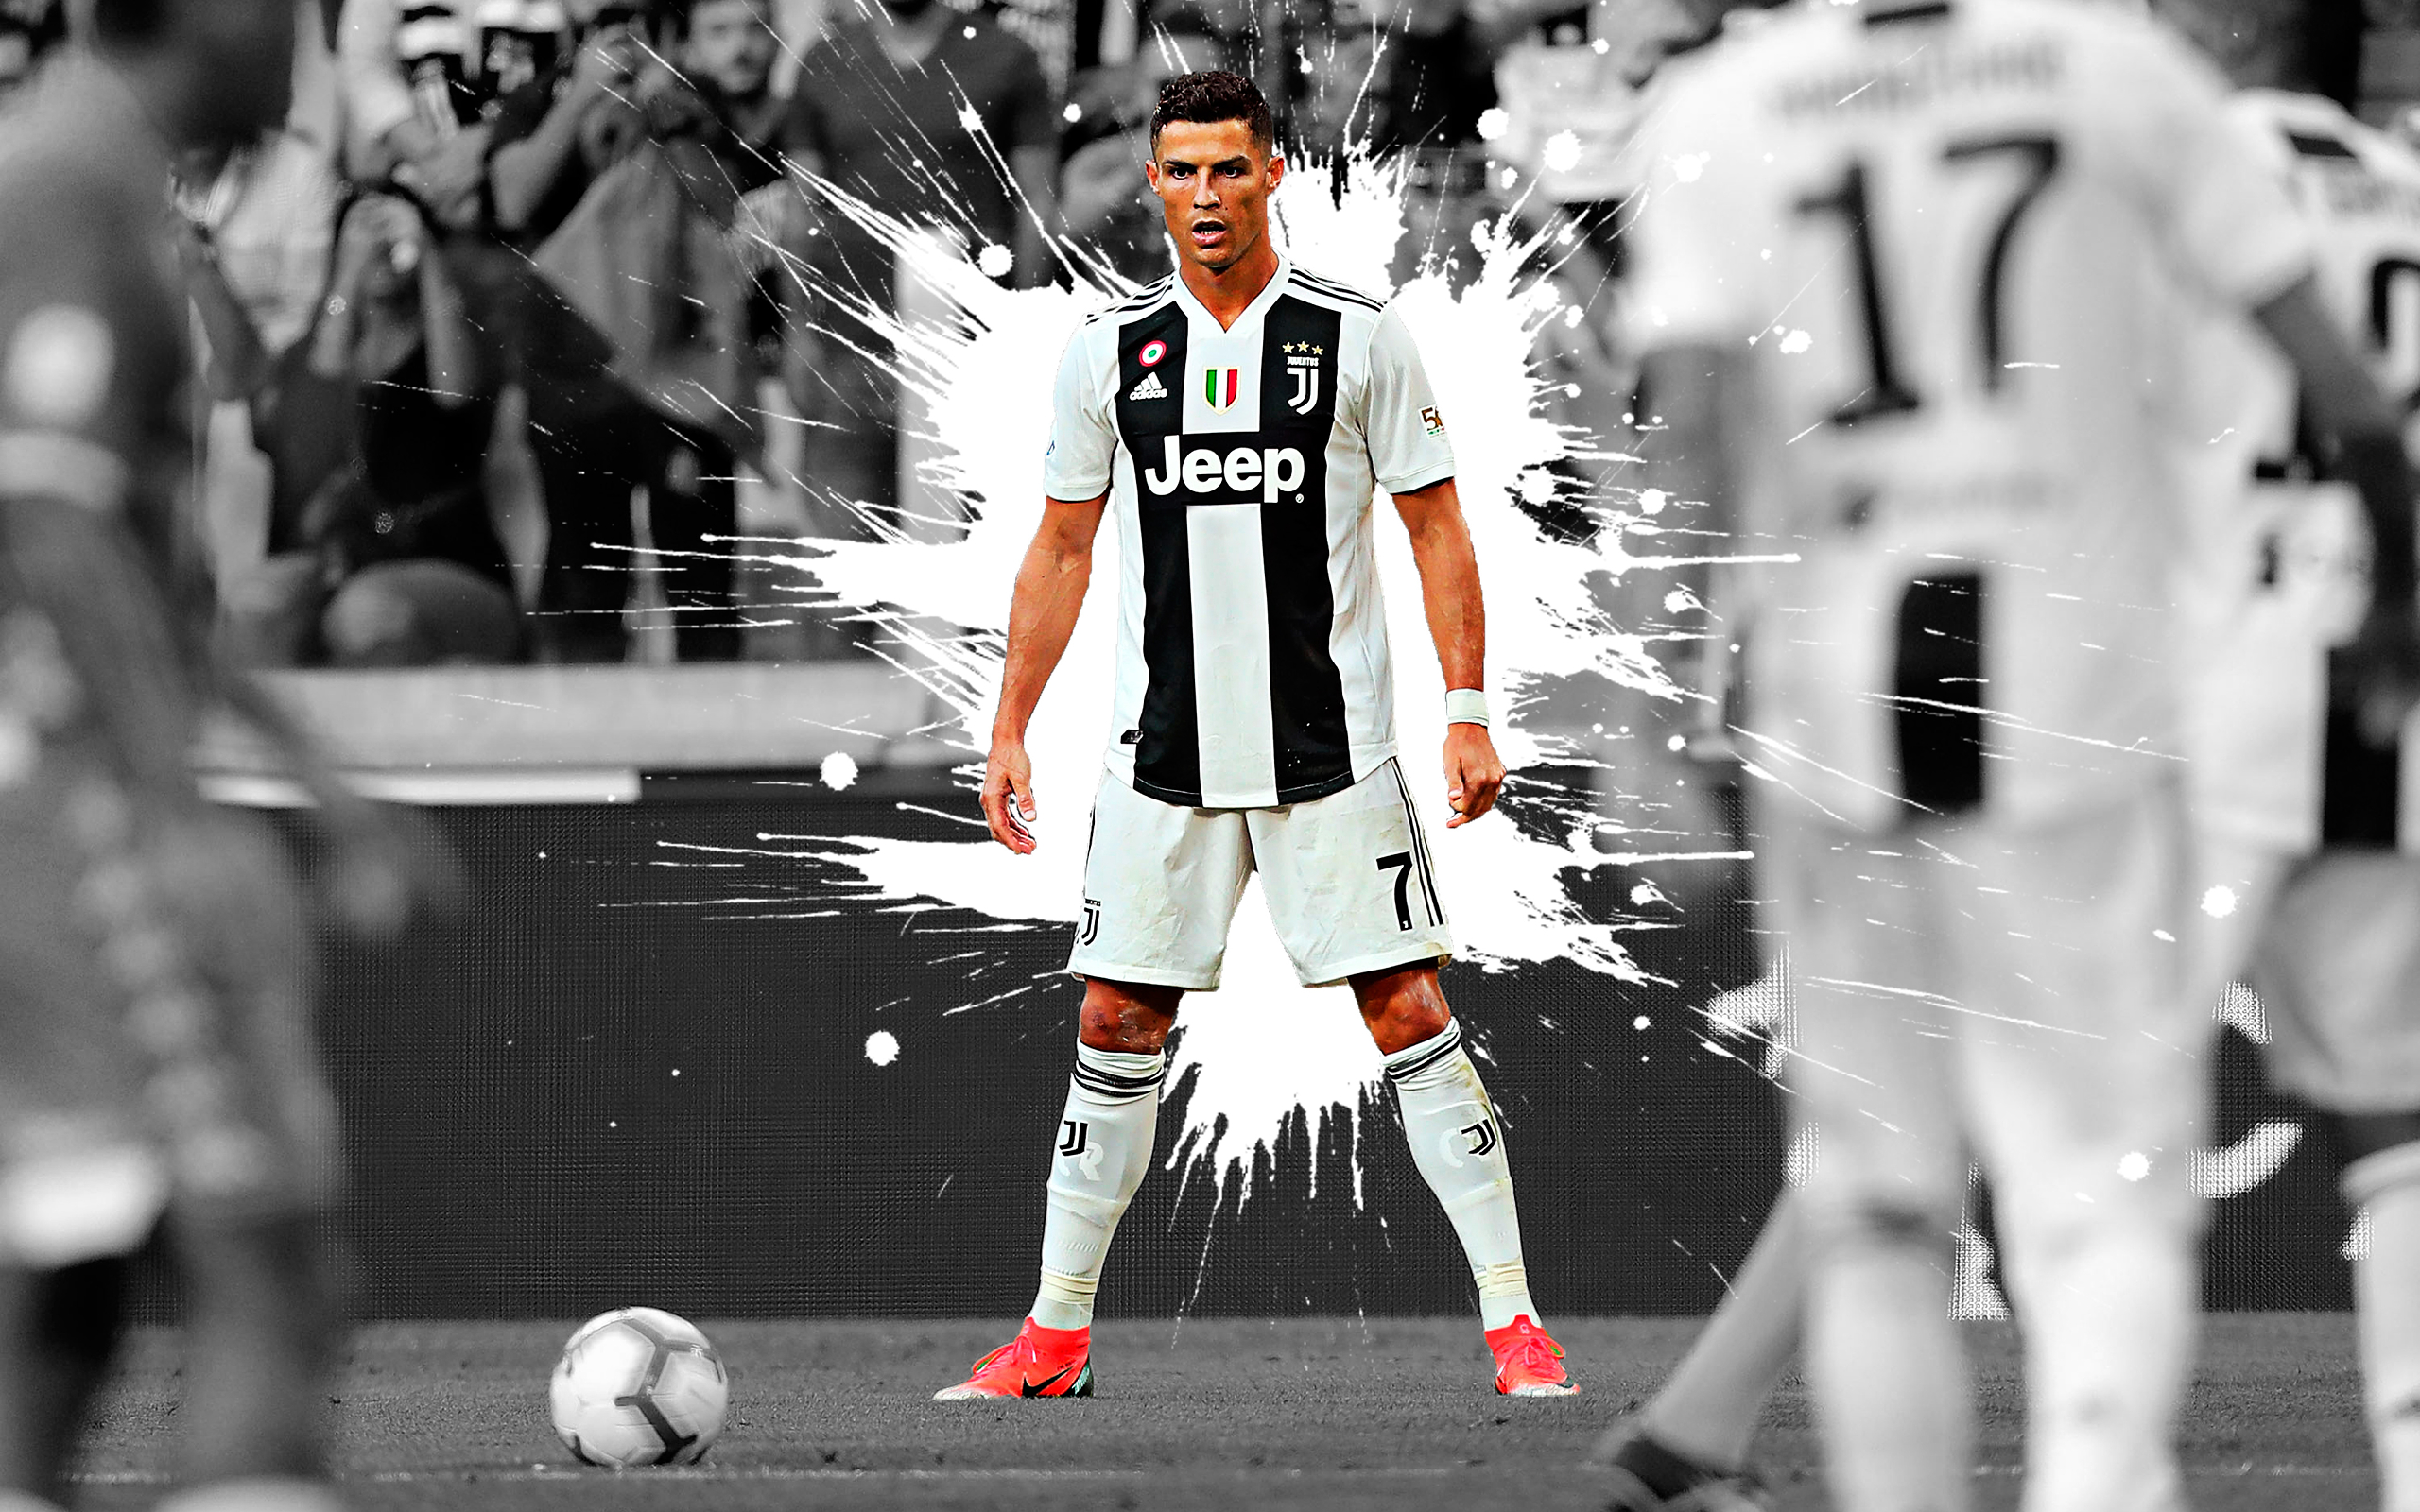 Cristiano Ronaldo Juventus Hd Wallpaper Background Image 2560x1600 Id 961844 Wallpaper Abyss